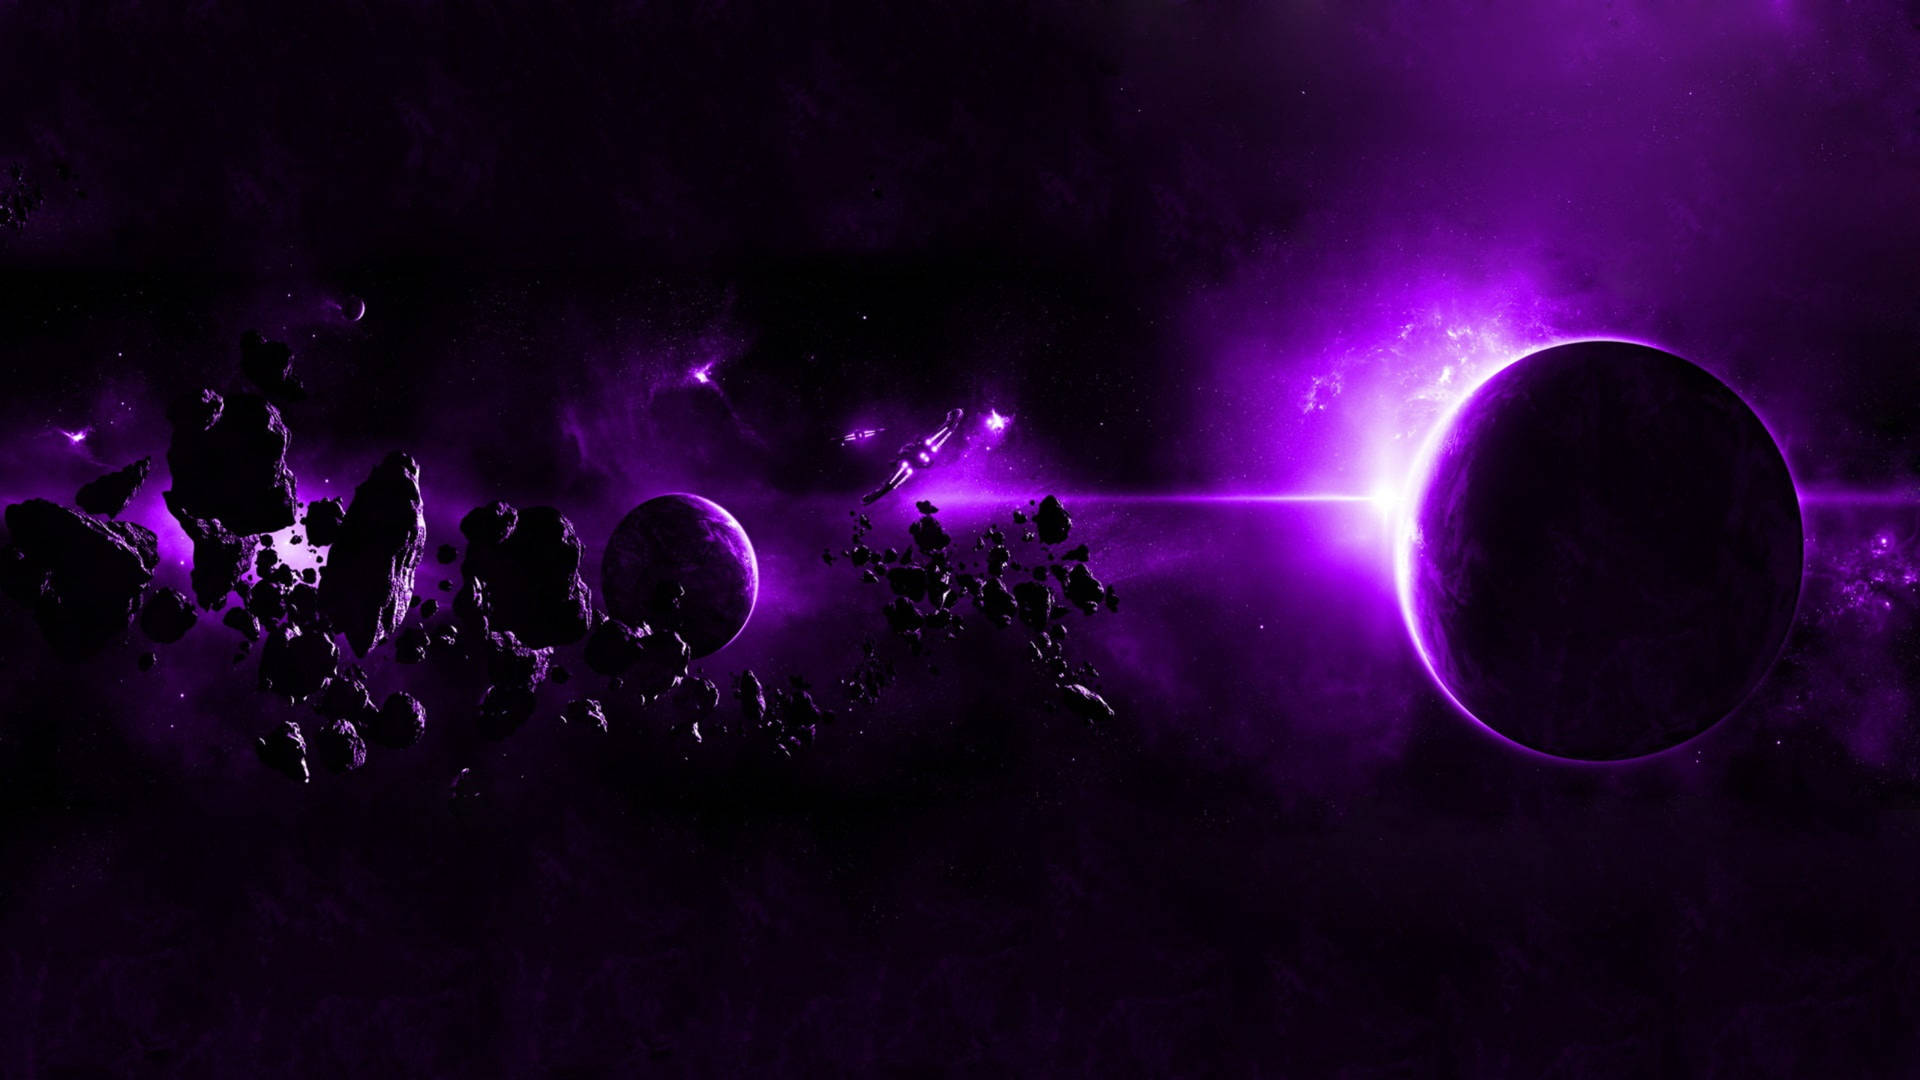 Dynamic Purple Space Planets Wallpaper